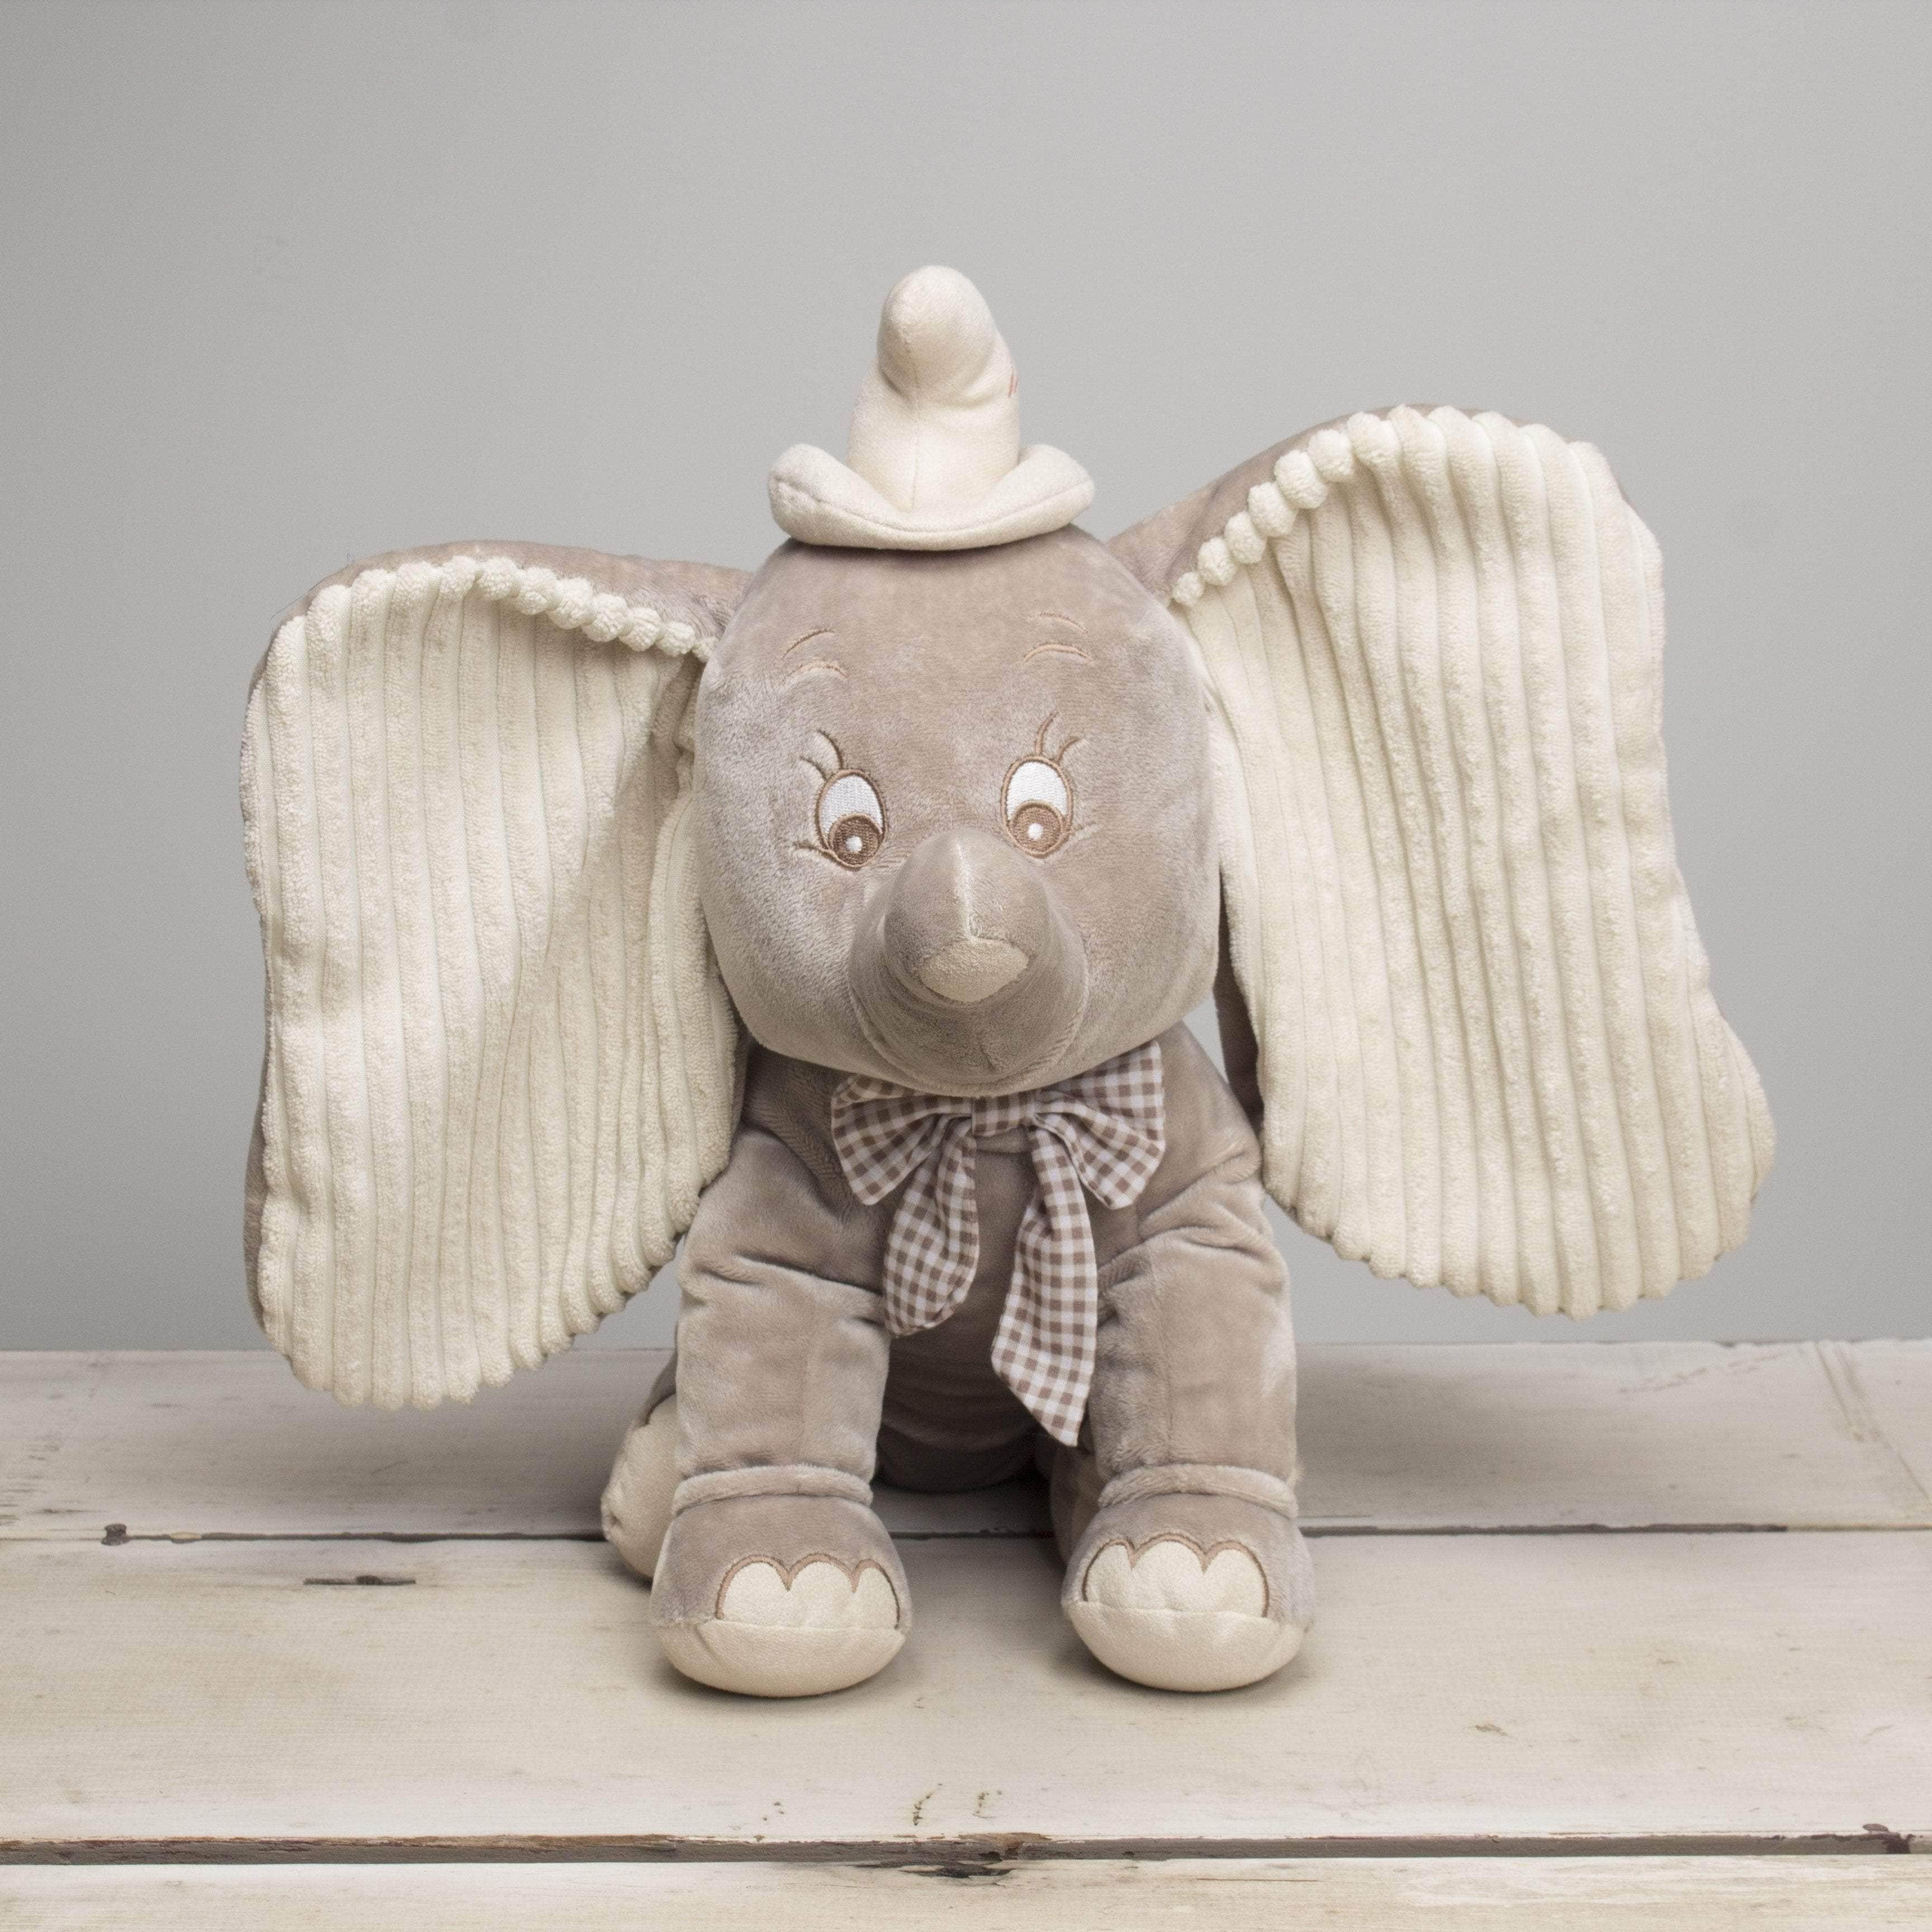 "Dumbo" the 16in Luxury Plush Elephant Animal Toy by Disney